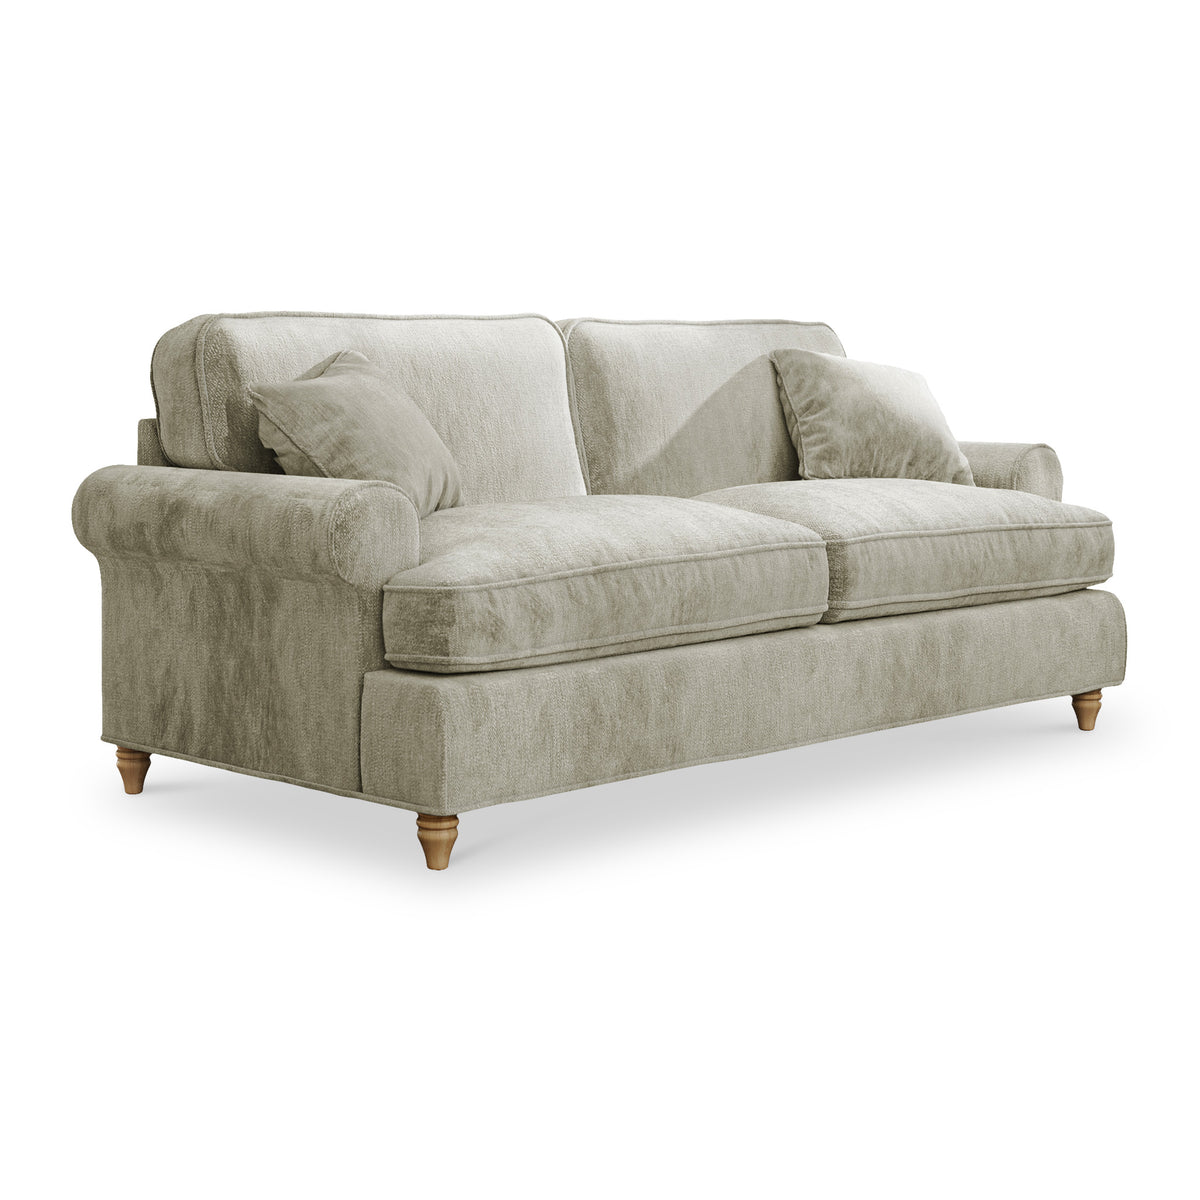 Alfie Mink 3 Seater Sofa from Roseland Furniture